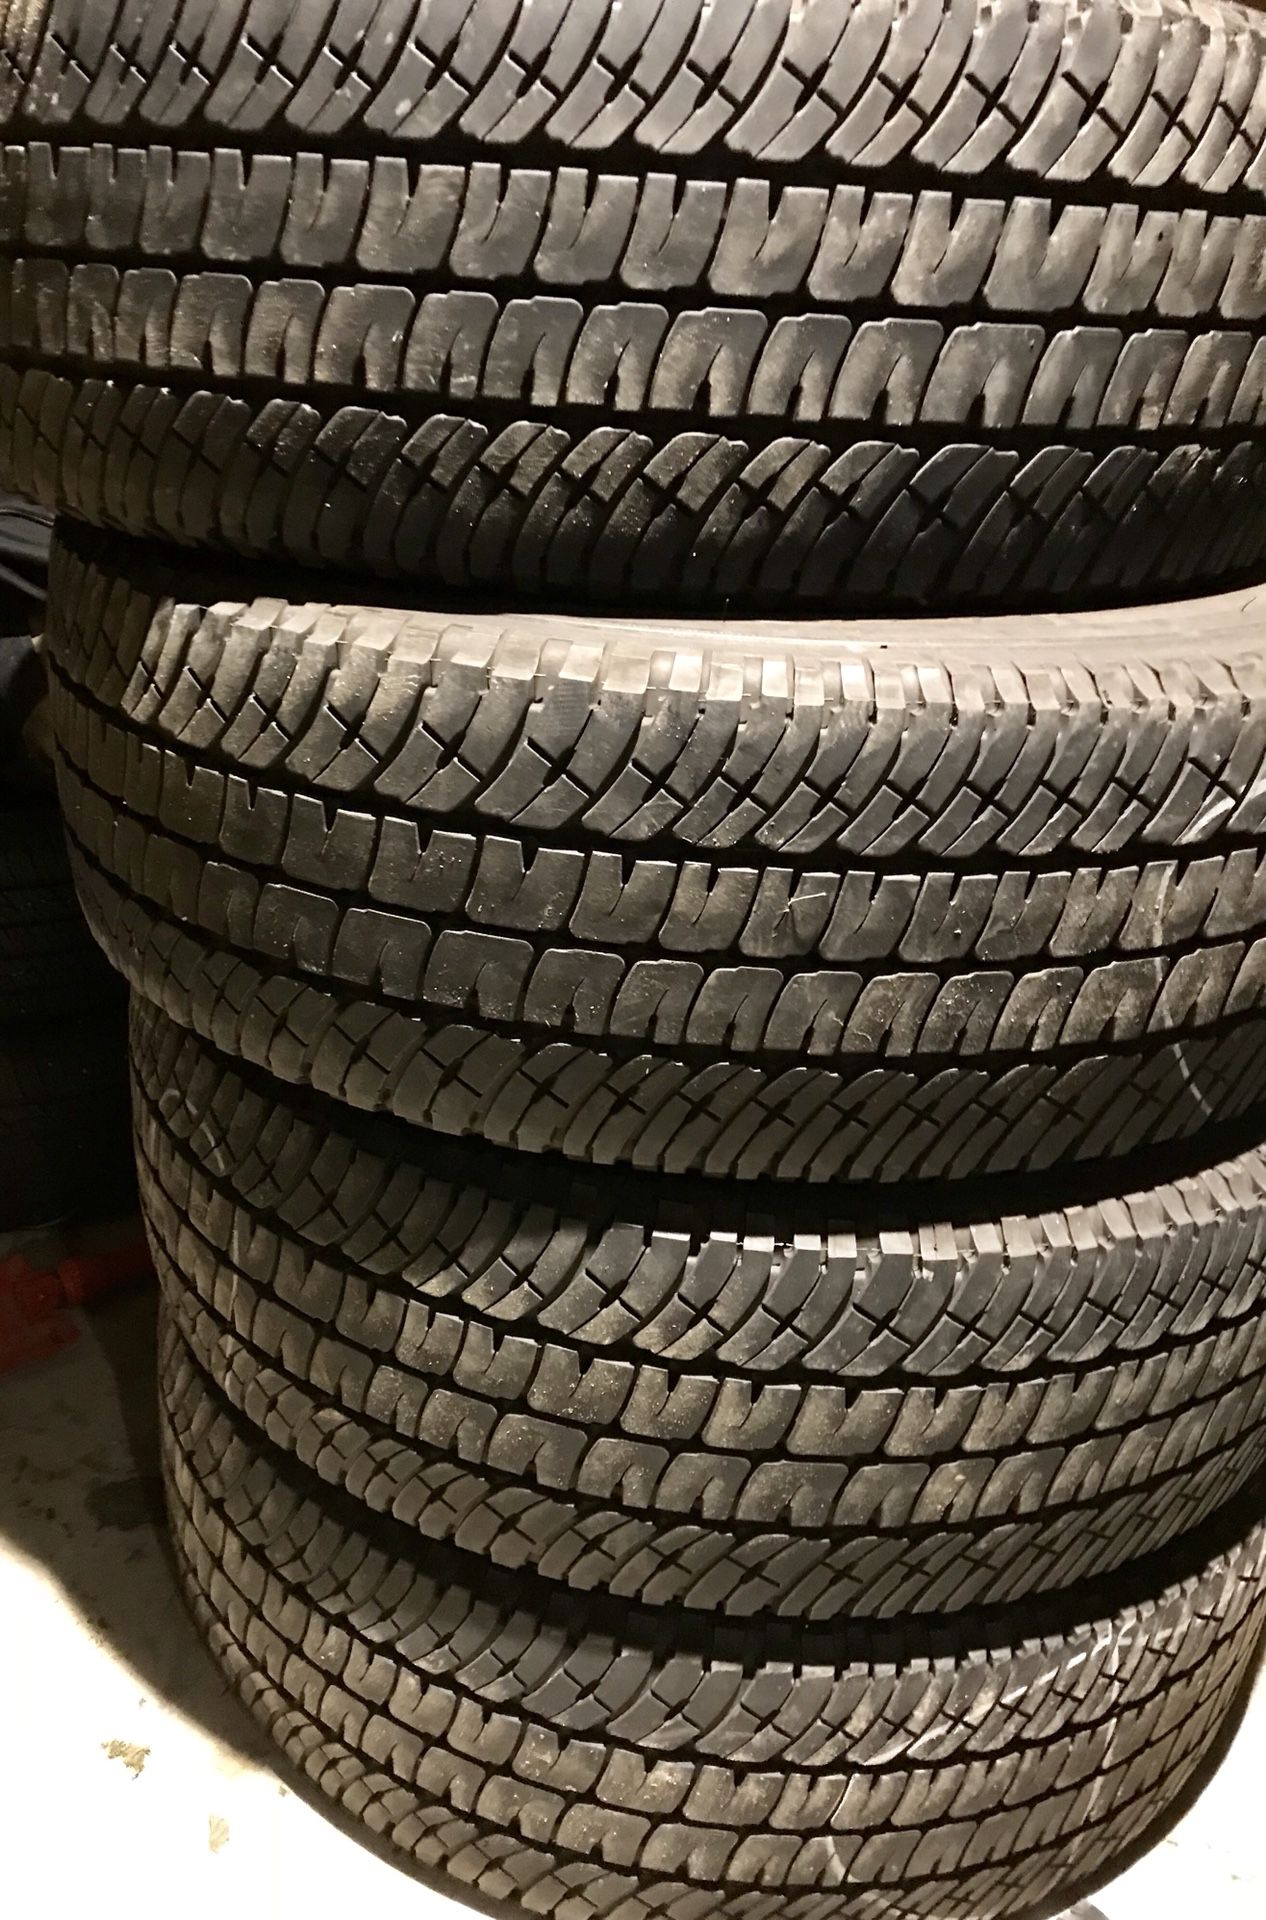 275/70-18 Michelin LTX AT2 tires